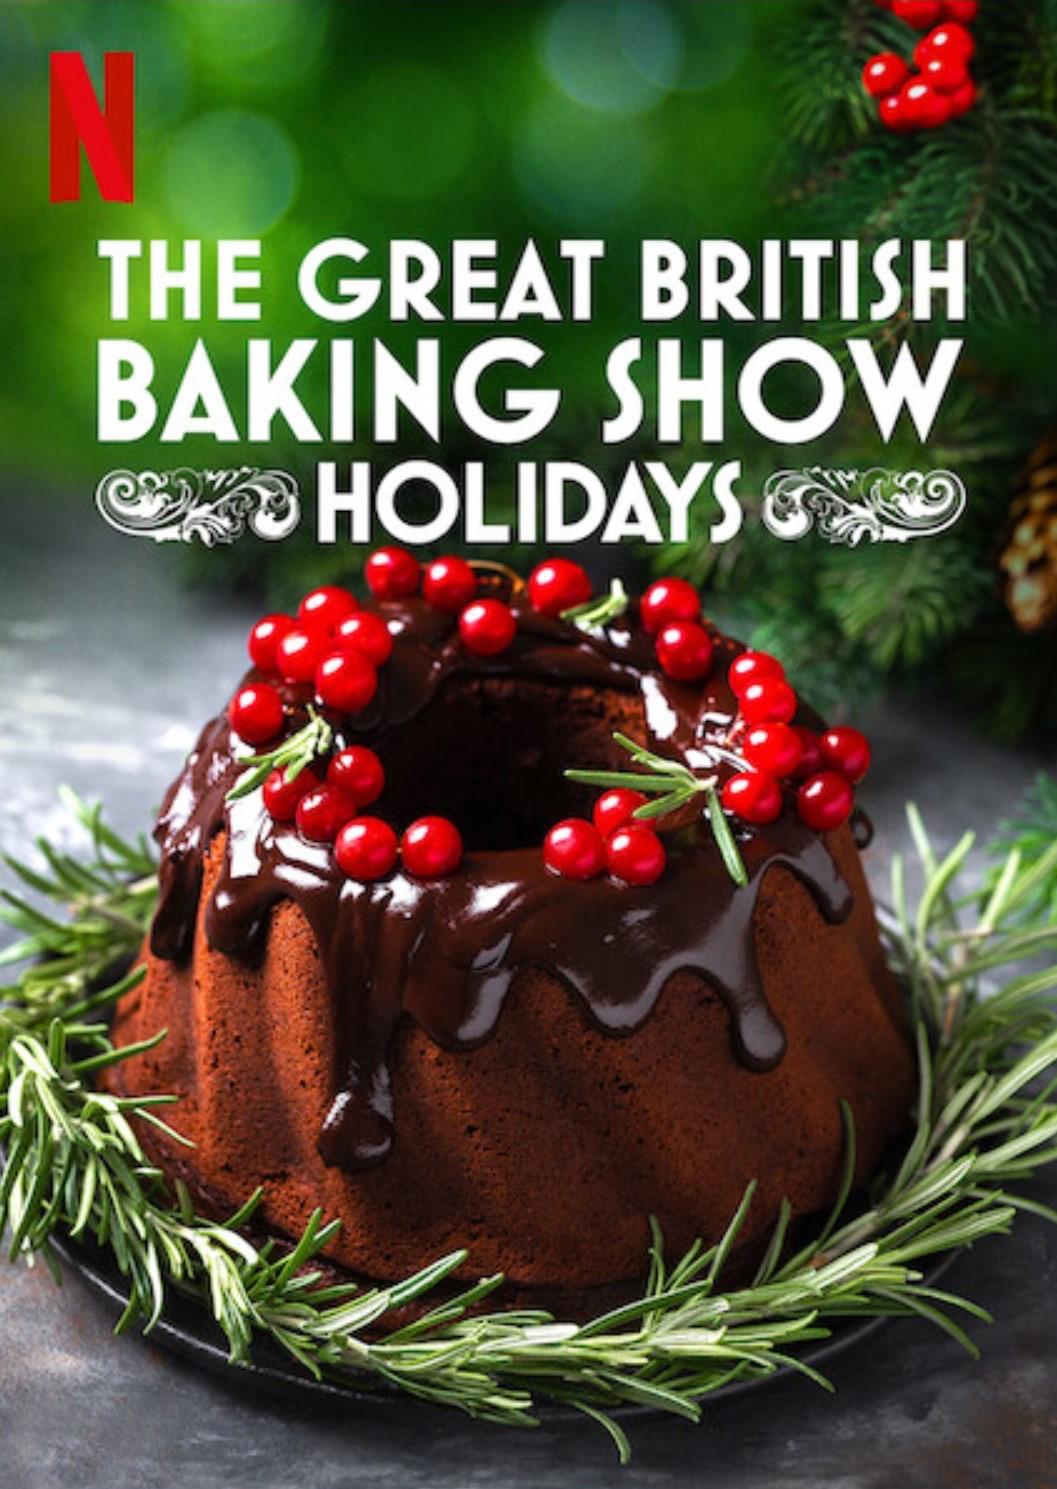 Is The Great British Baking Show: Holidays Season 4 on Netflix?